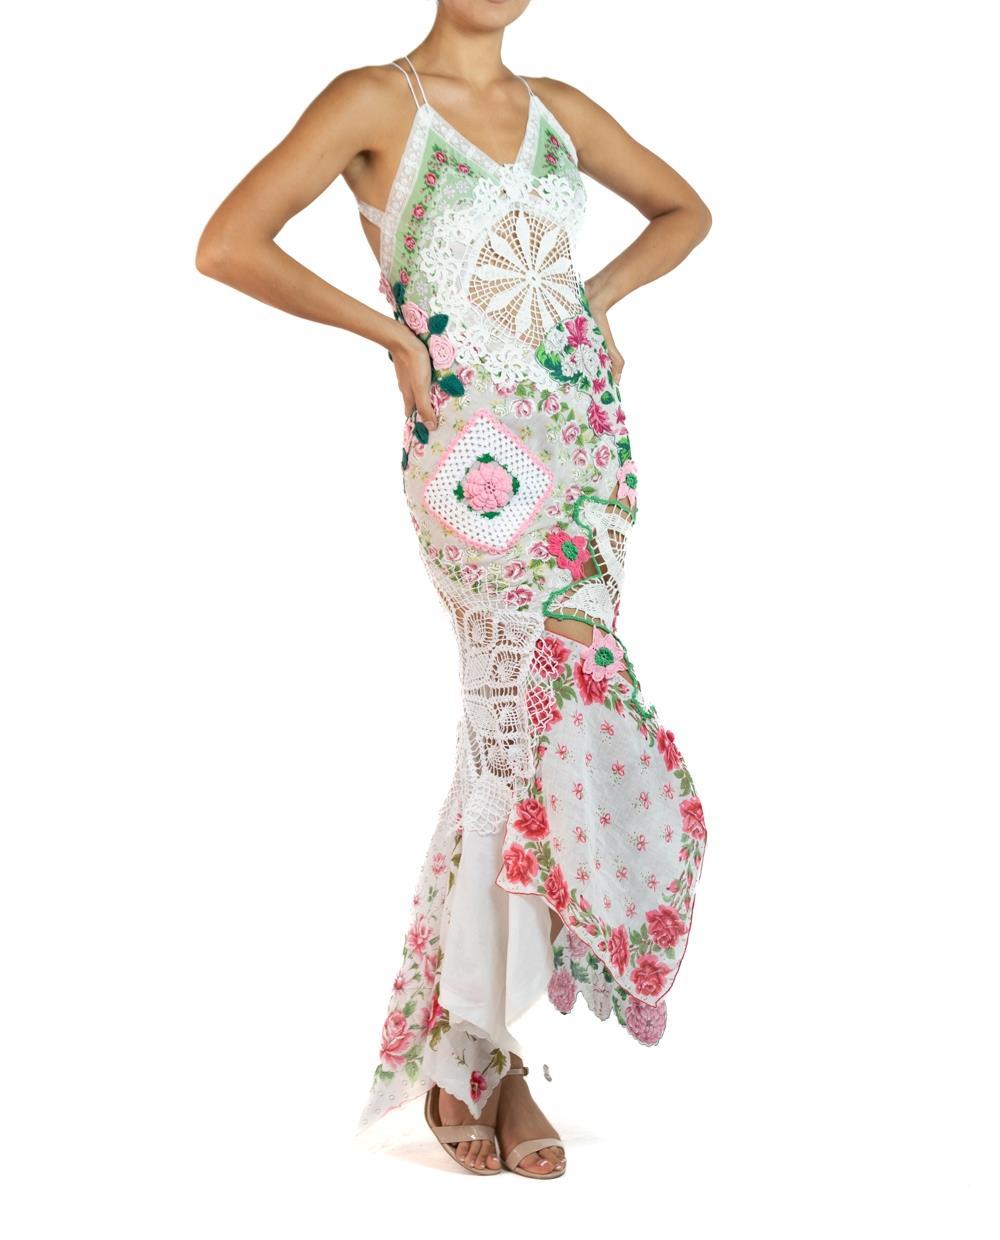 Morphew Collection White, Pink & Green Cotton Crochet Long Vintage Doily Dress  1